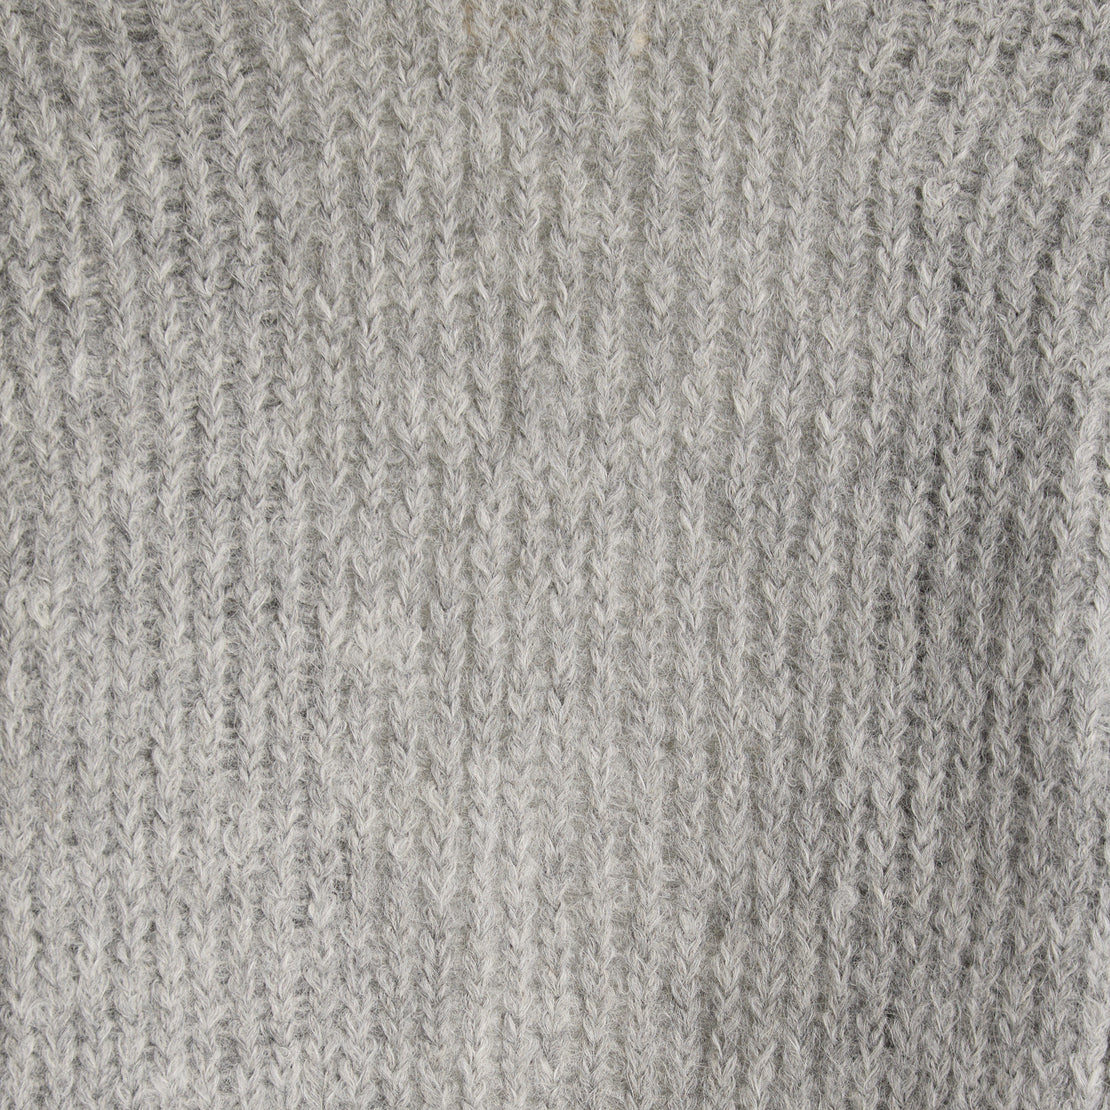 Cora Cardigan - Grey/Multi - Atelier Delphine - STAG Provisions - W - Tops - Sweater